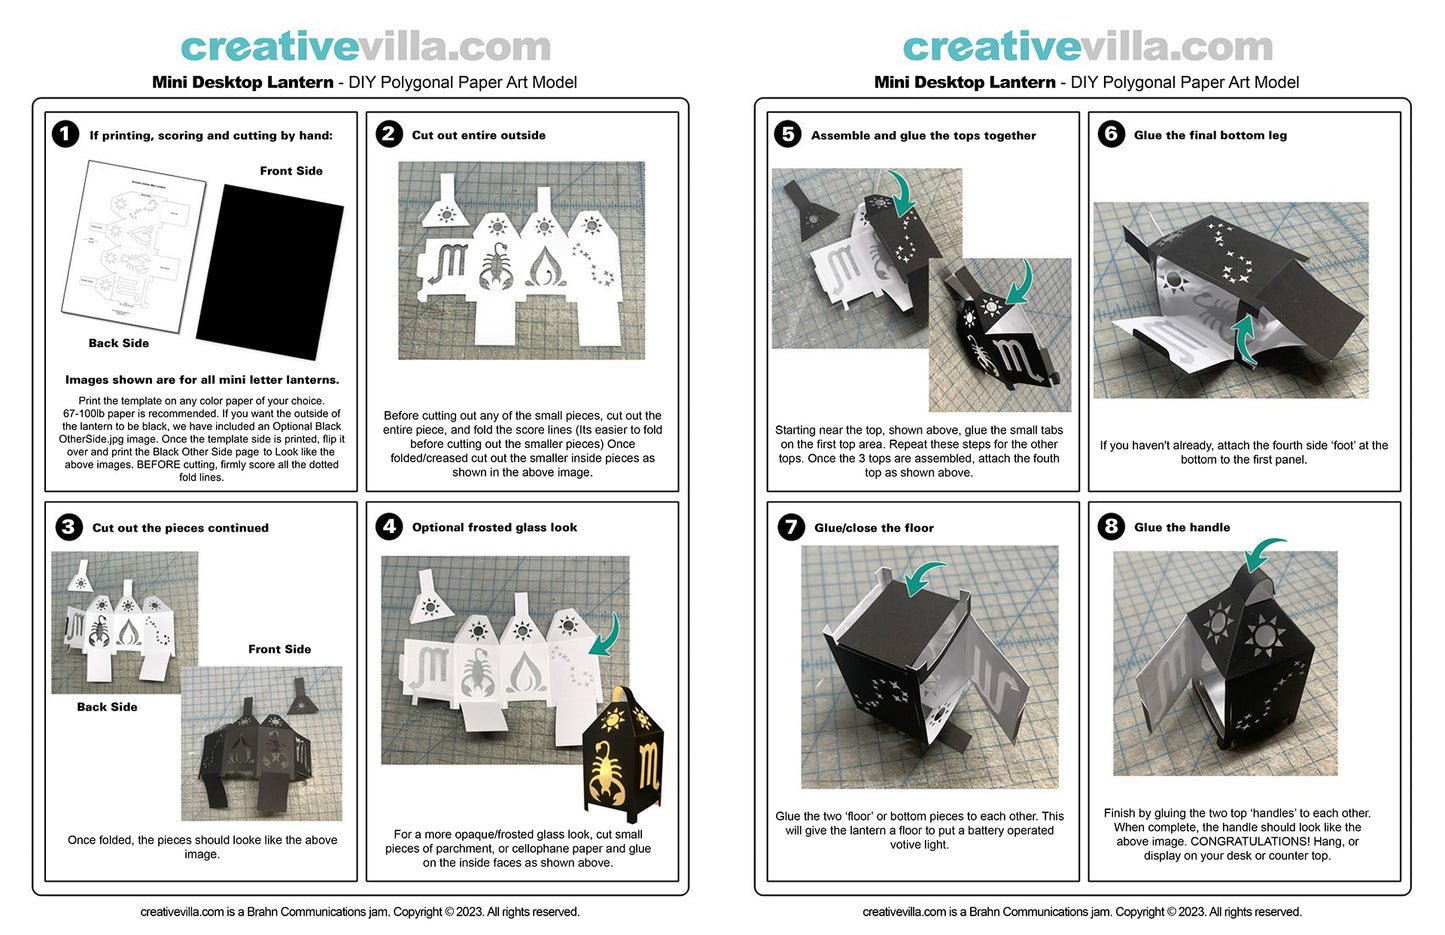 Leo Zodiac Mini Desktop Lantern DIY Low Poly Paper Model Template, Cricut Paper Craft